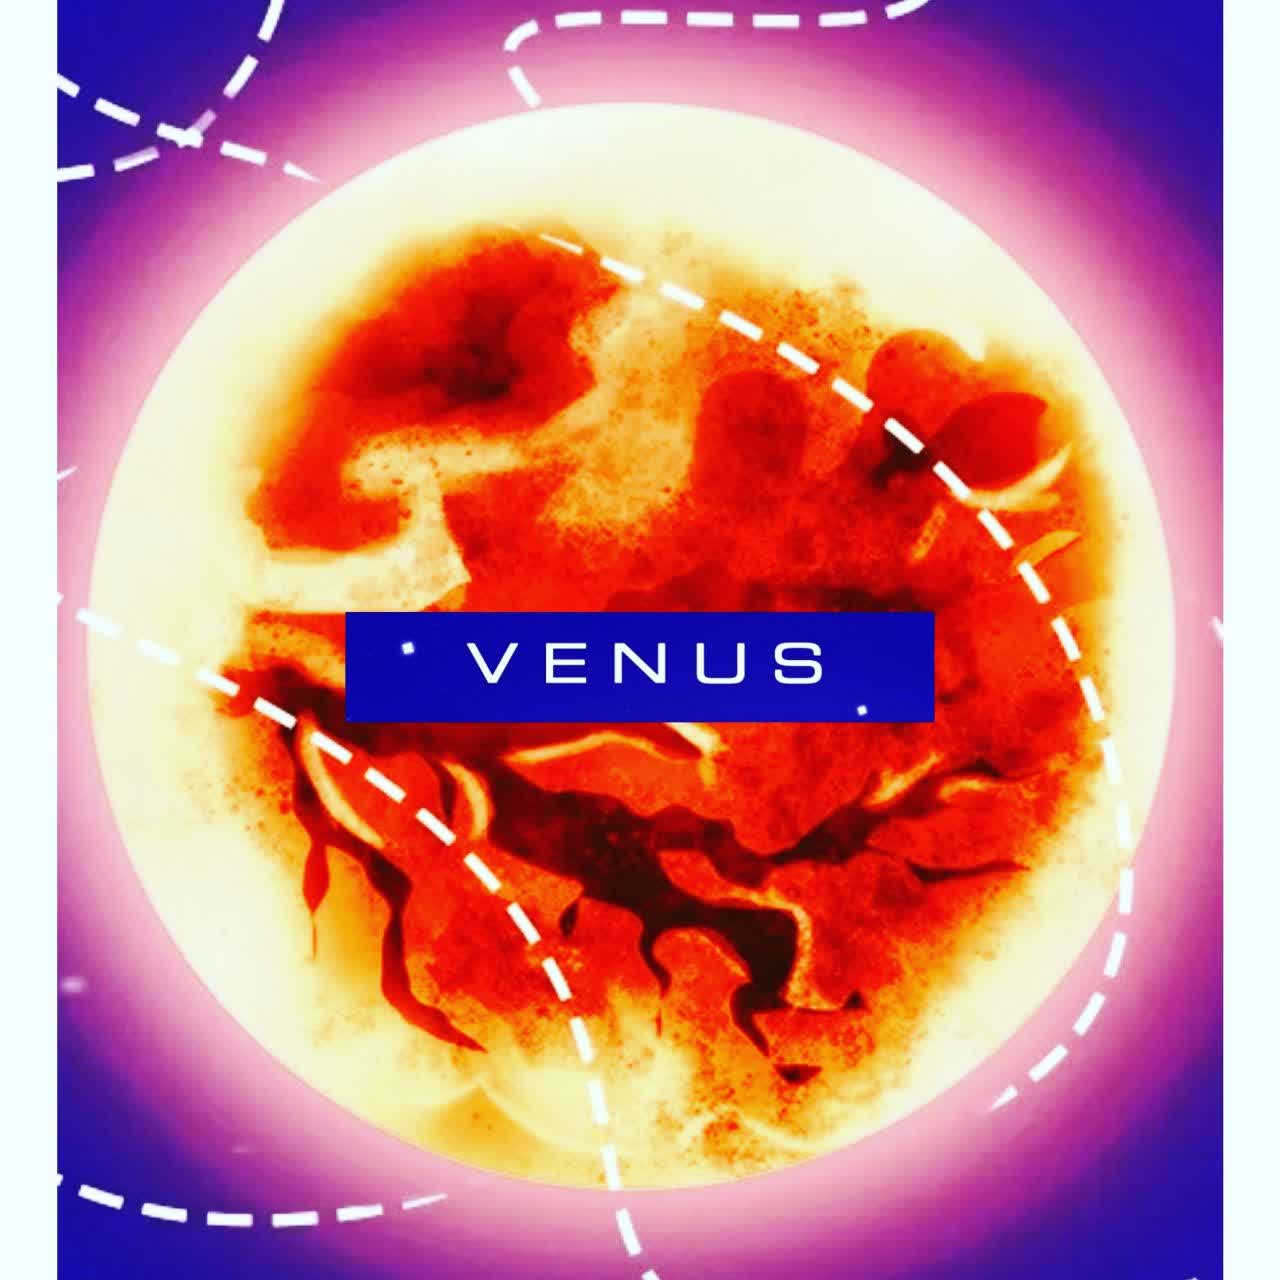 Venusshop